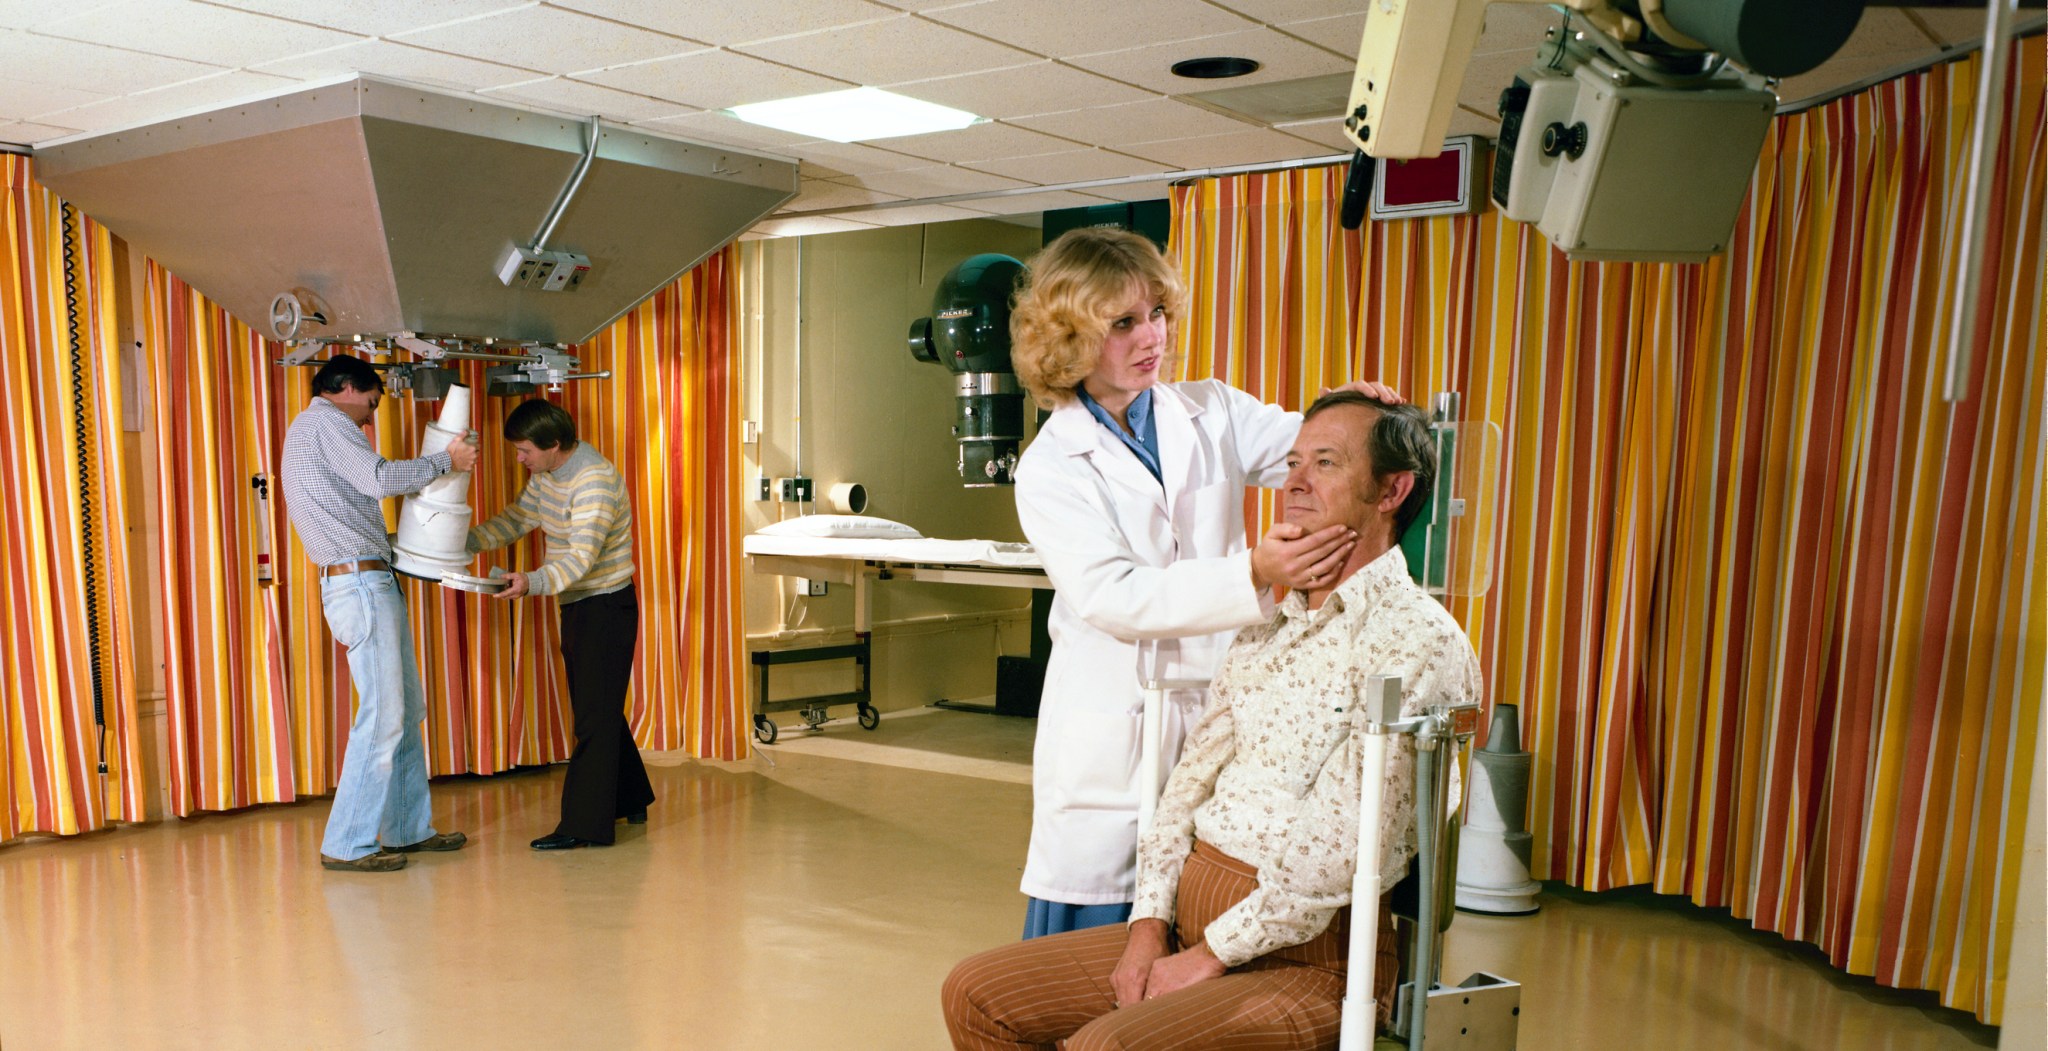 Nurse examines man in chair.